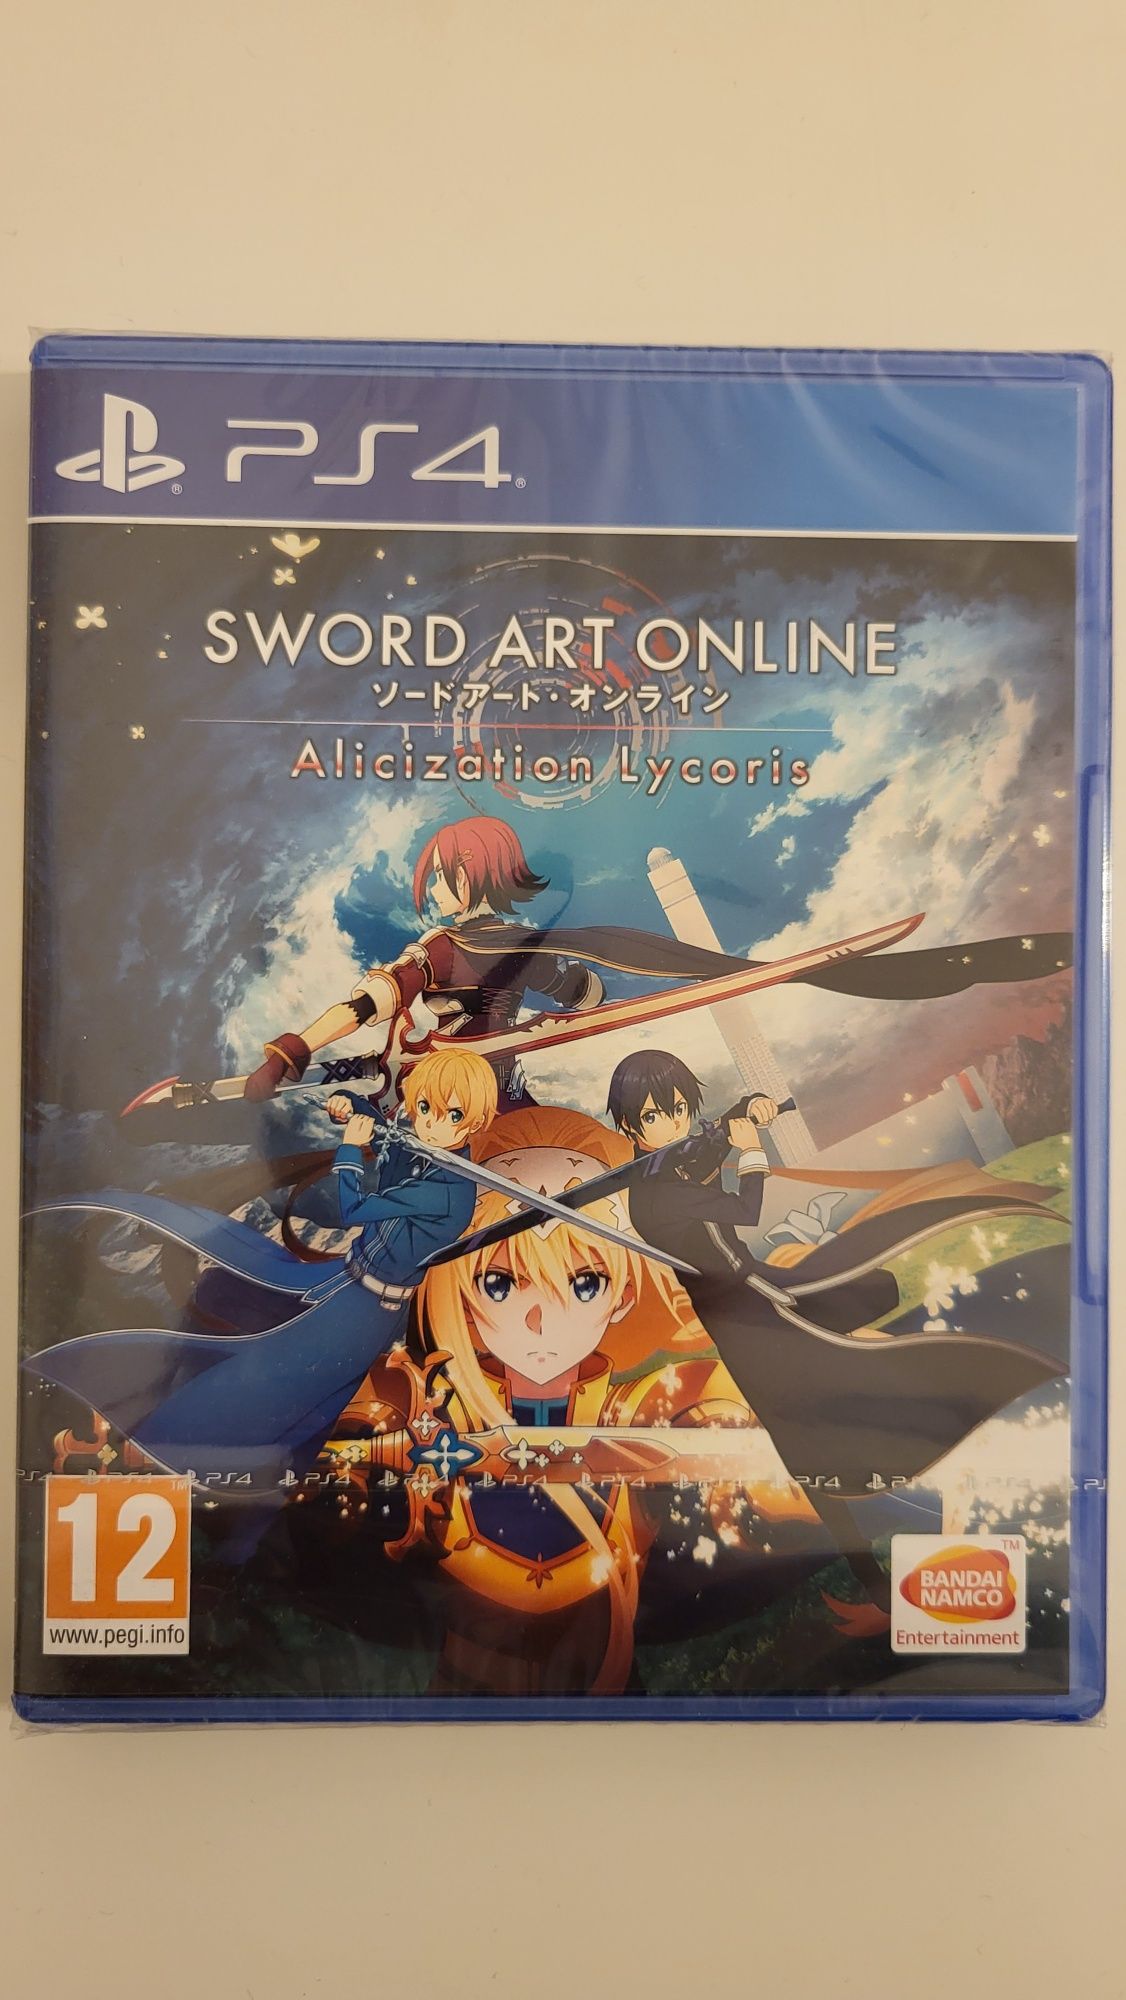 Jogo "Sword Art Online" - PS4 (Novo)